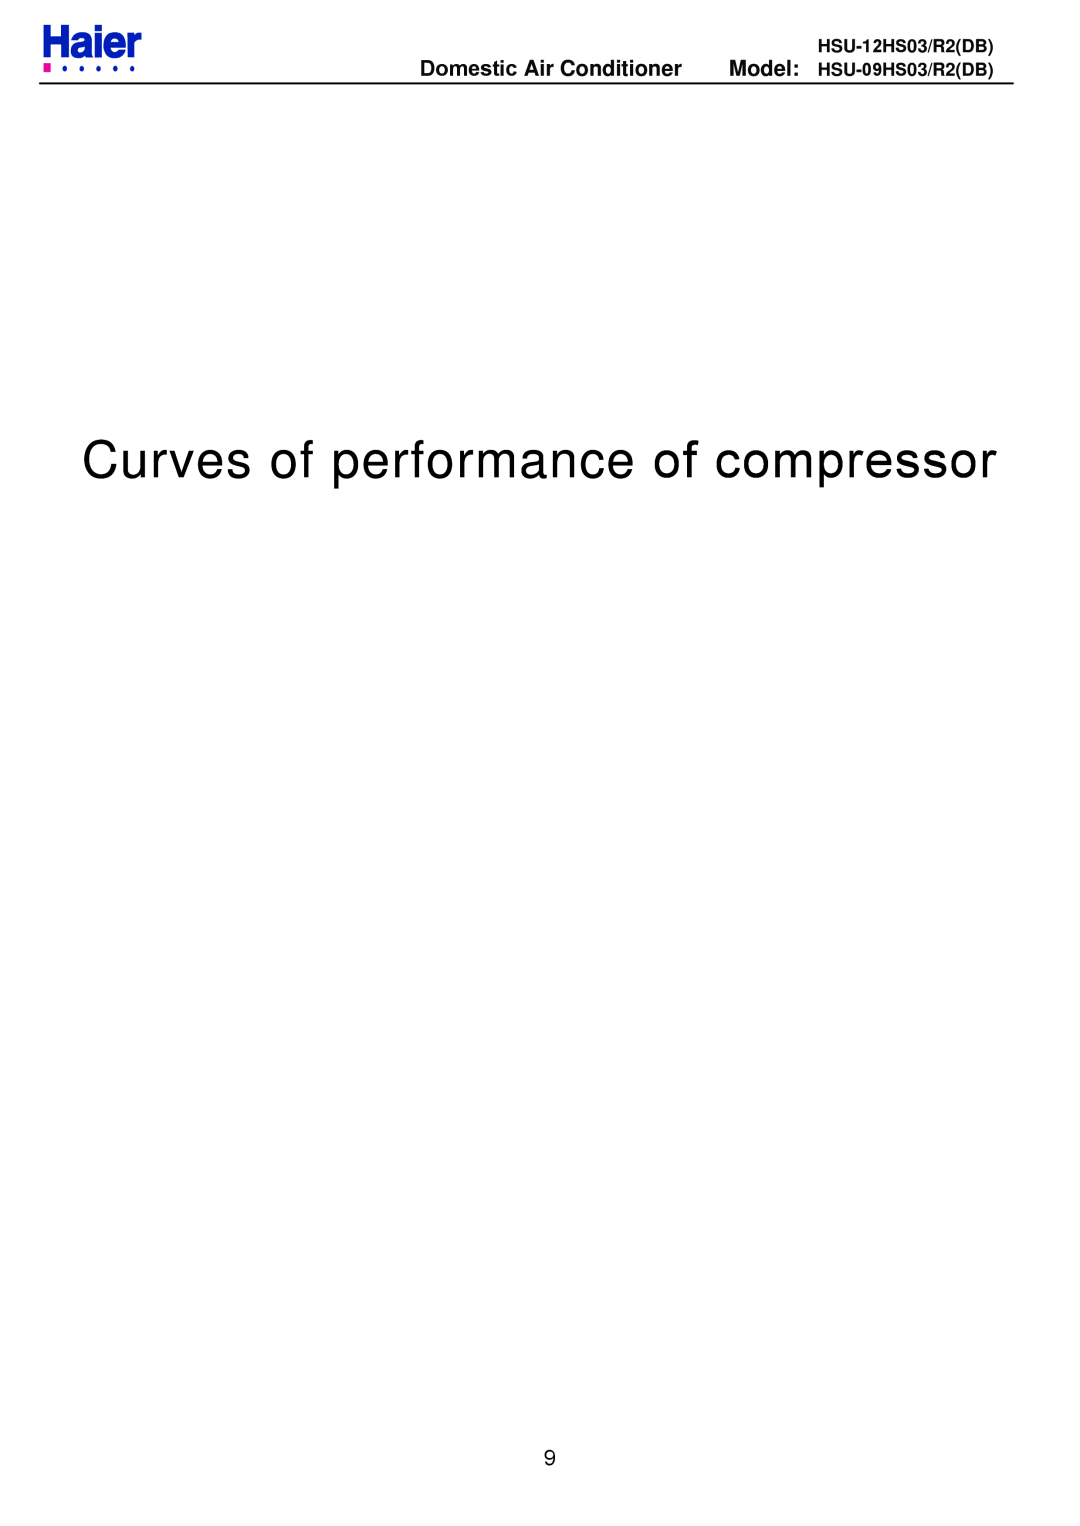 Haier HSU-12HS03/R2DB service manual Curves of performance of compressor, Domestic Air Conditioner, Model HSU-09HS03/R2DB 